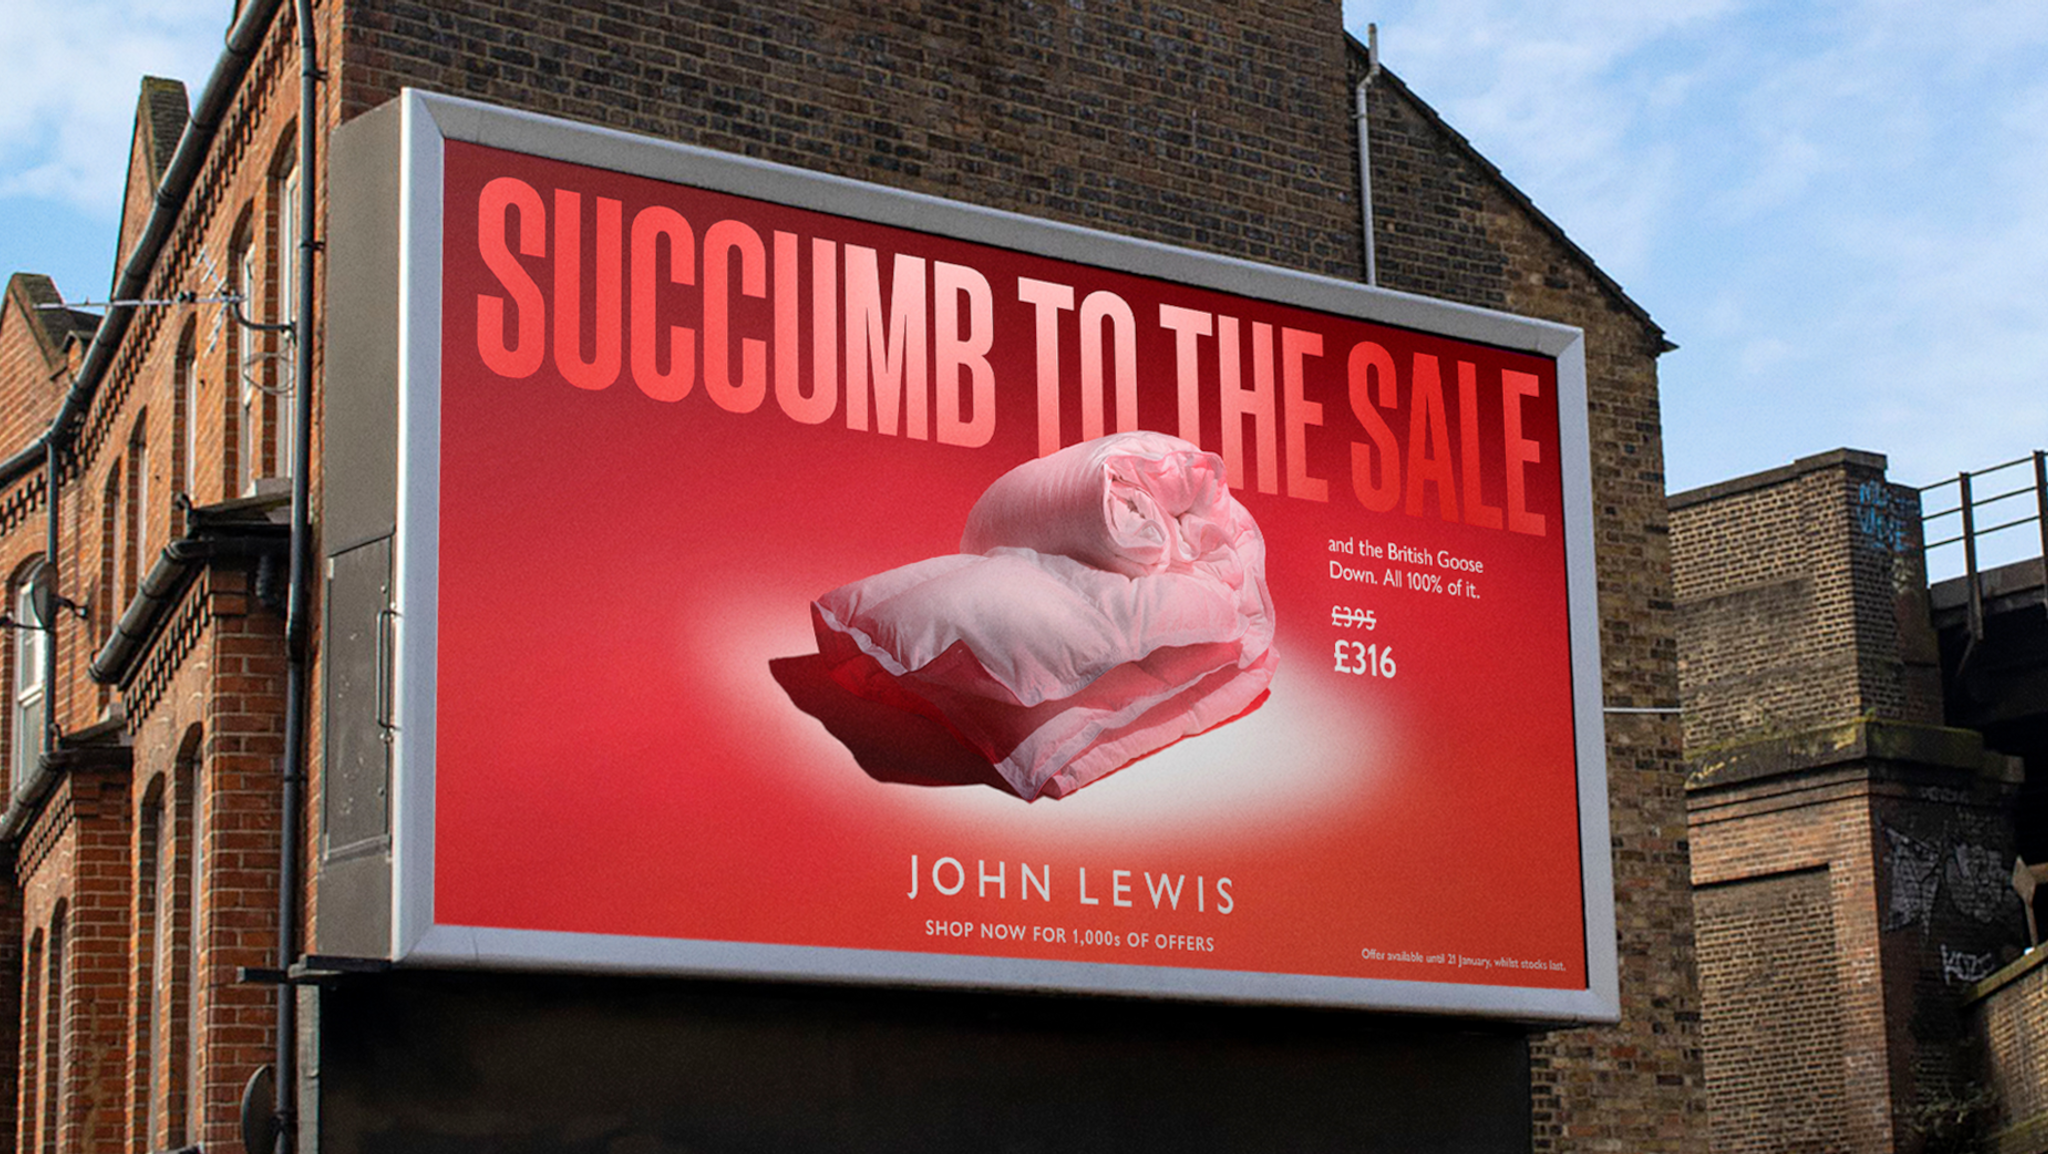 John Lewis nudges shoppers to give into sale temptation